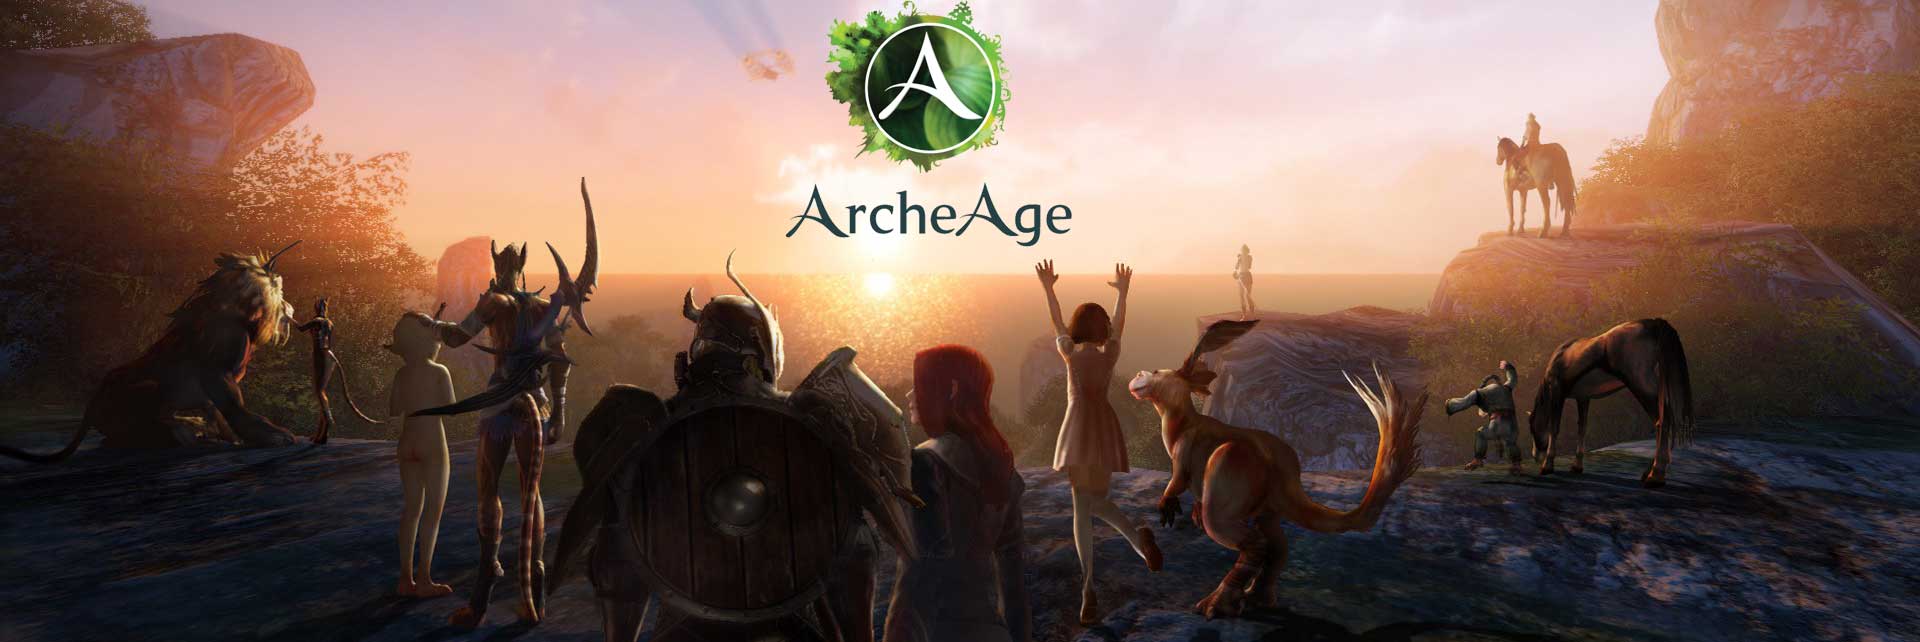 Скриншот к игре ArcheAge